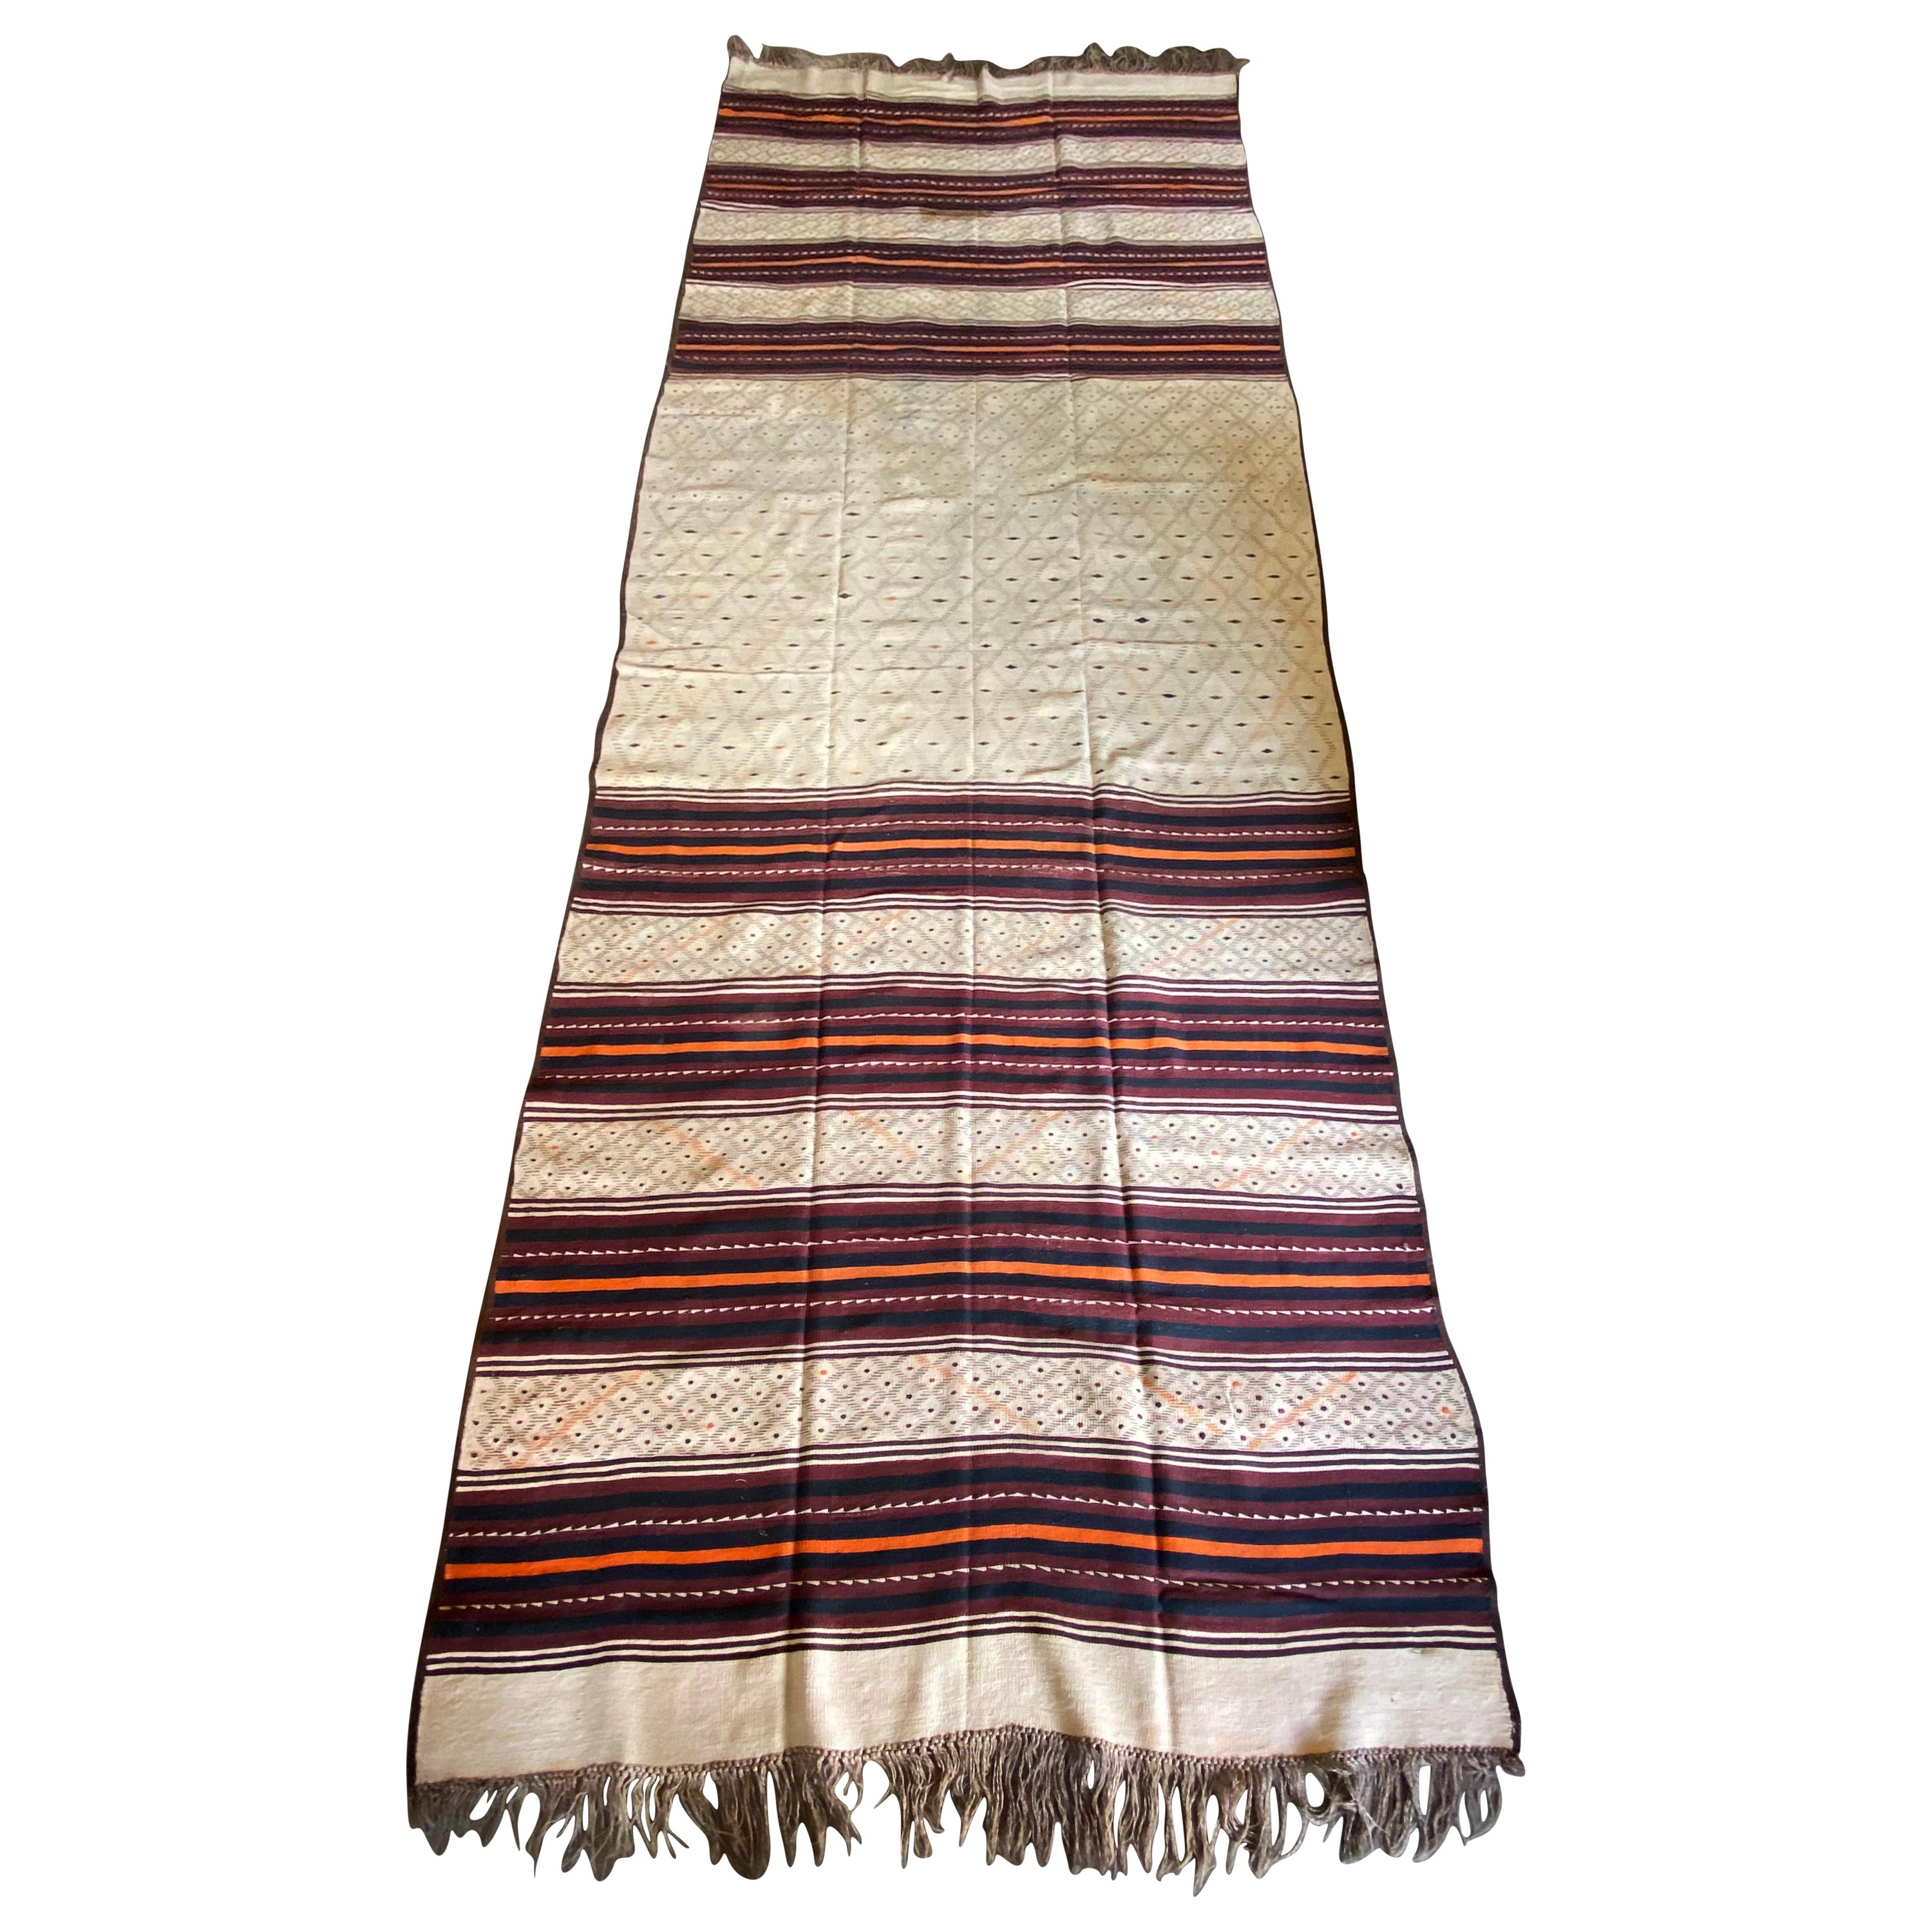 Uzbekistan Tartari Safid Kilim Rug from Wool, Early 20th Century For Sale